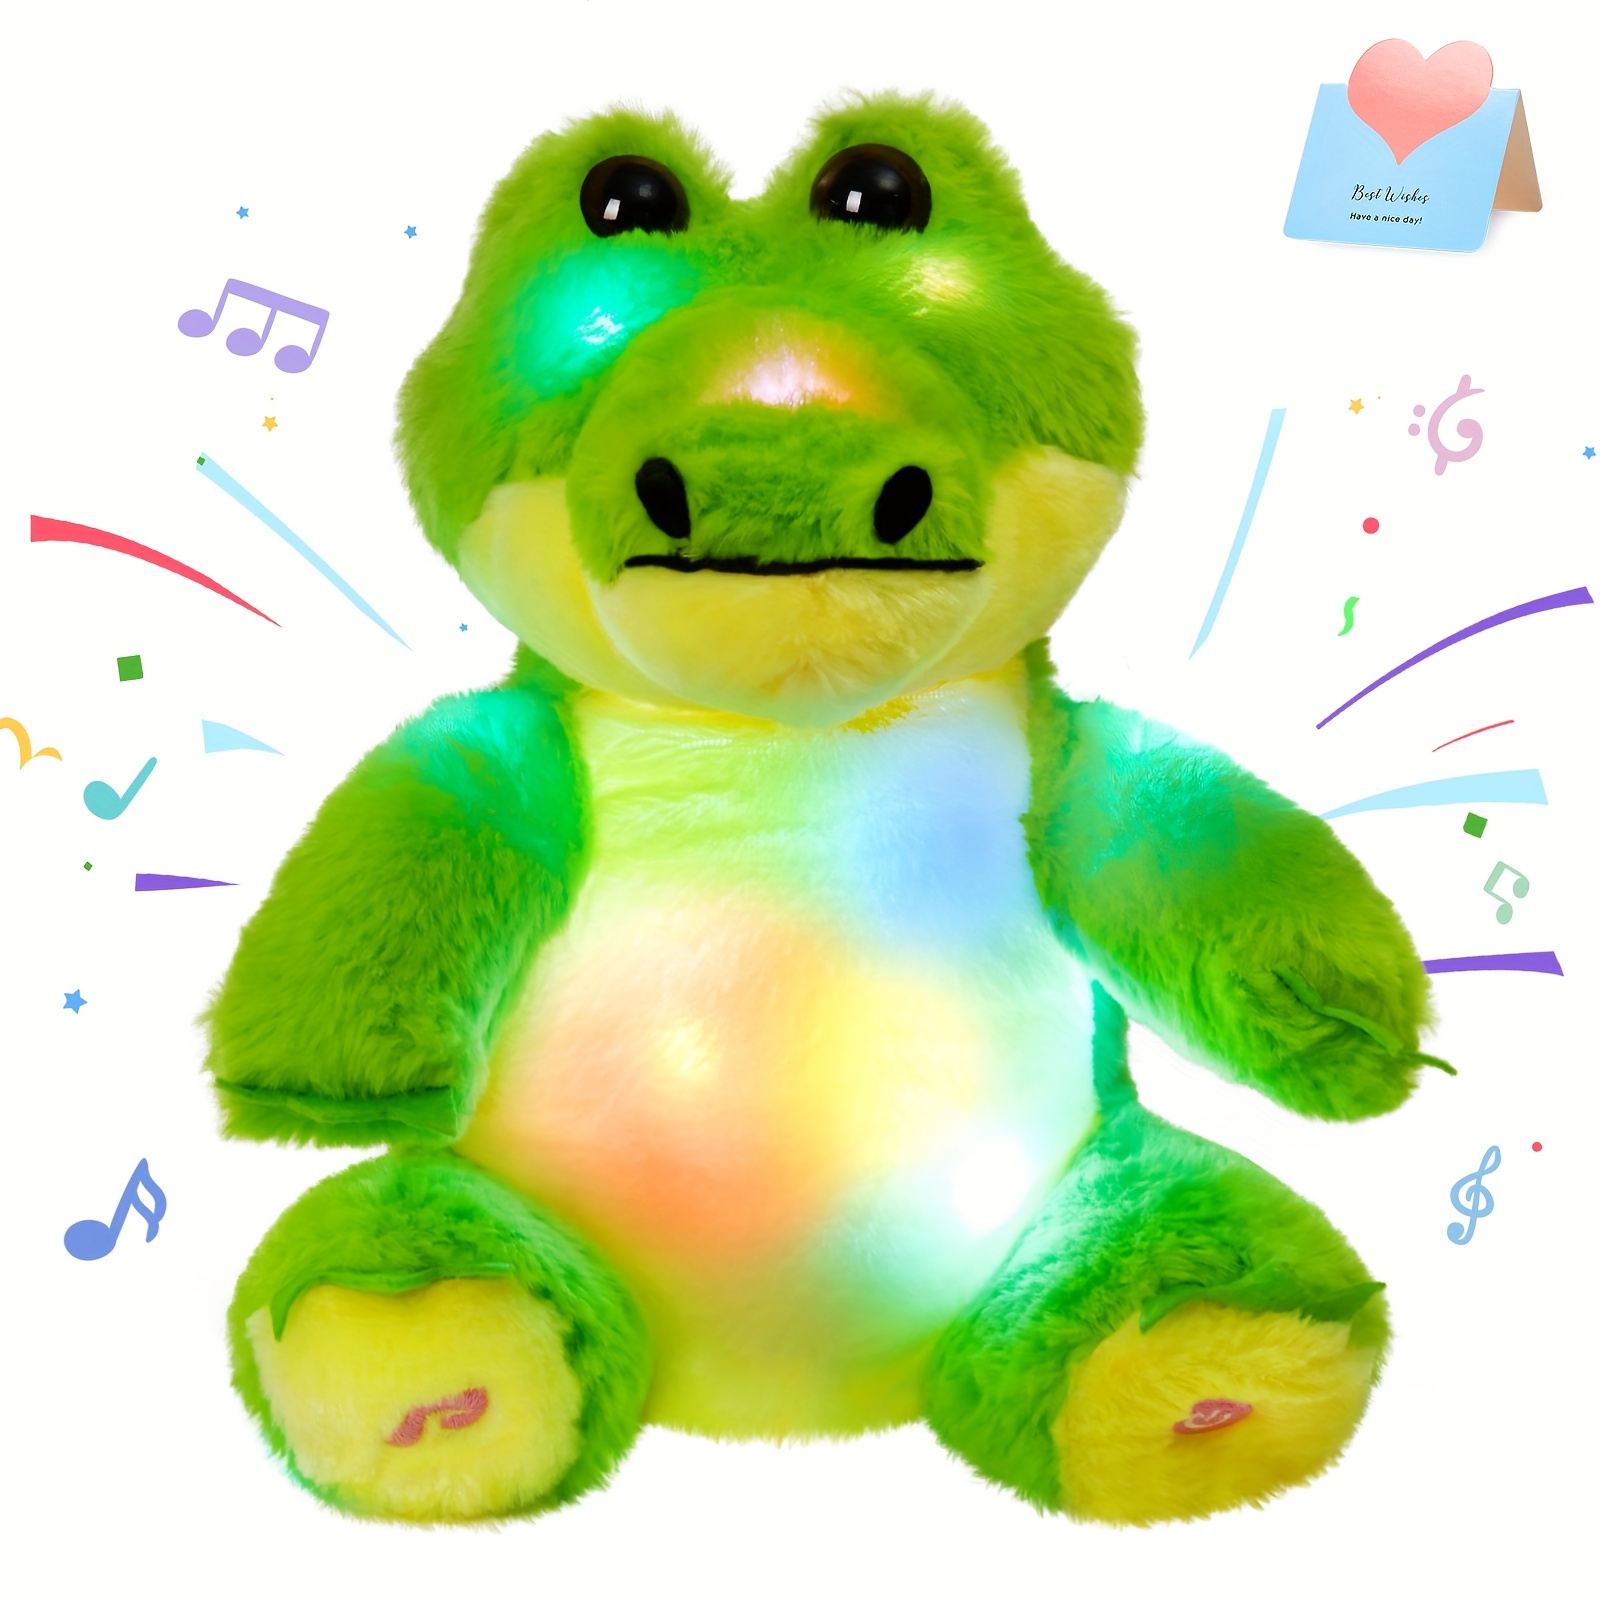 The Amazing Digital Circus Plush Toy Pomni Jax Stuffed Plush Toy Game Fan  Gift